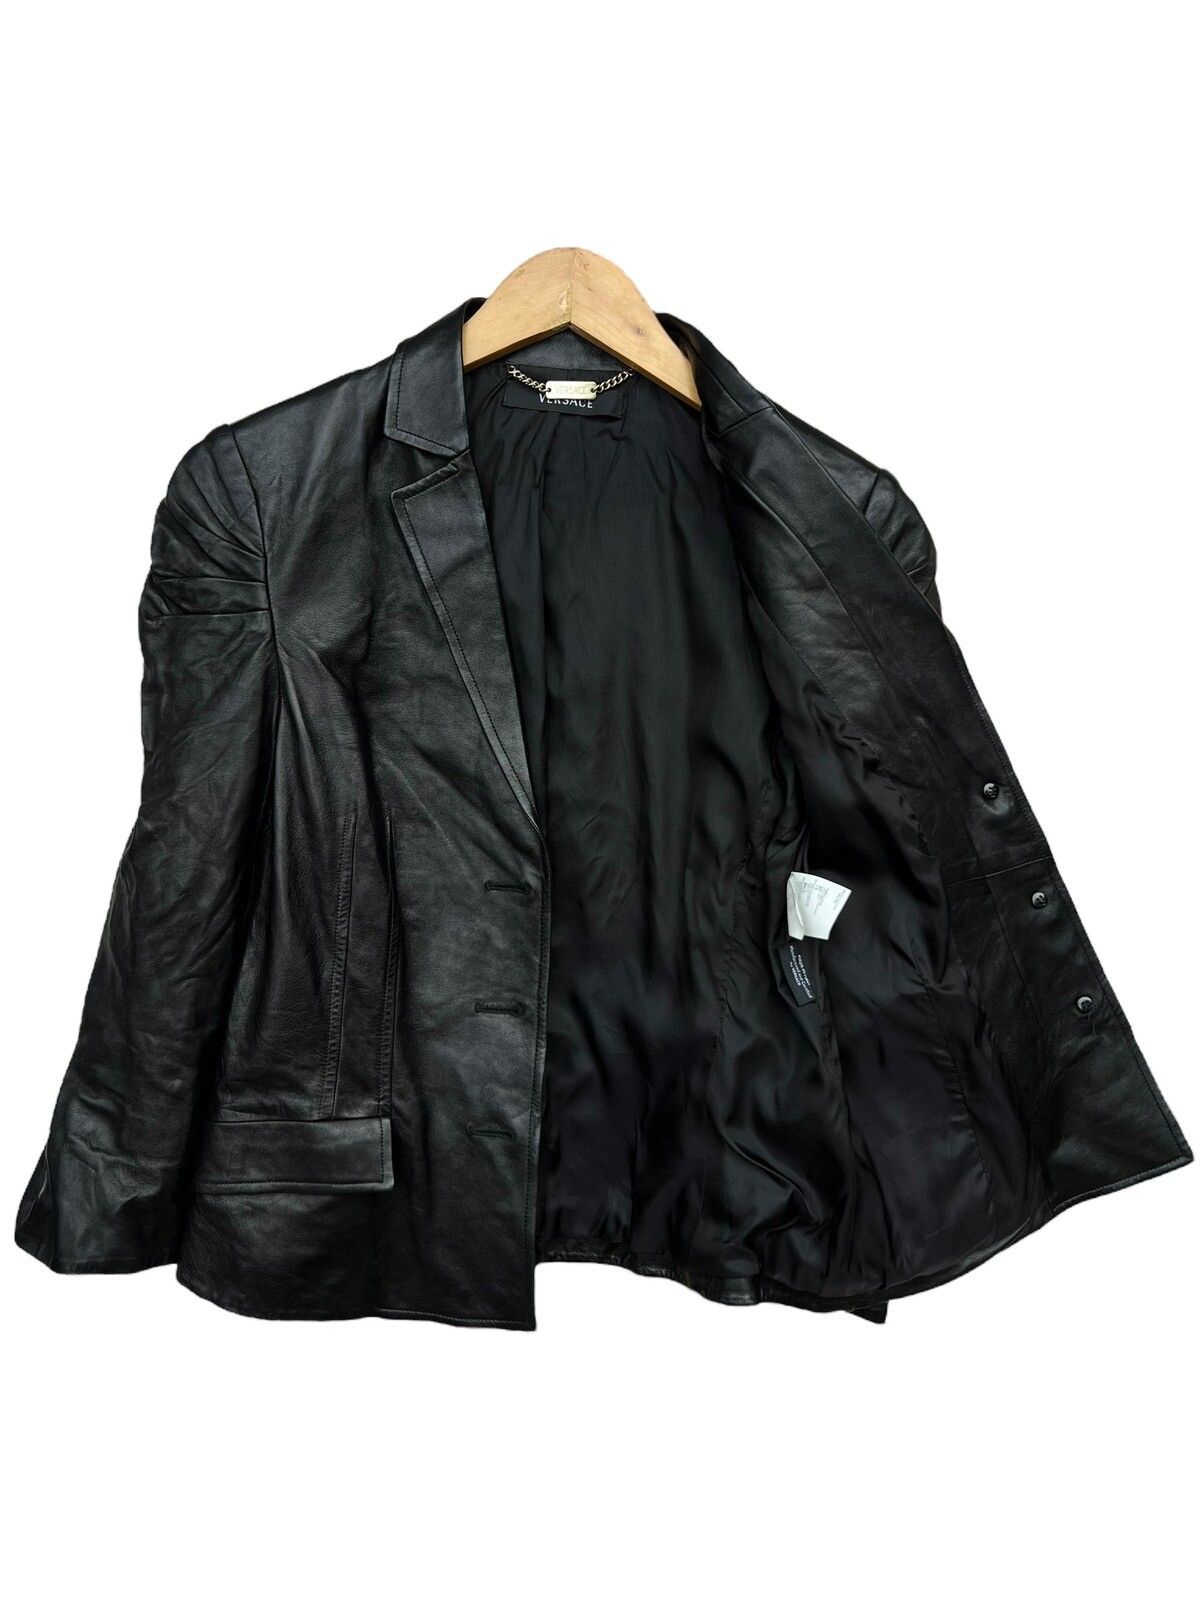 Versace Leather Jacket - 3